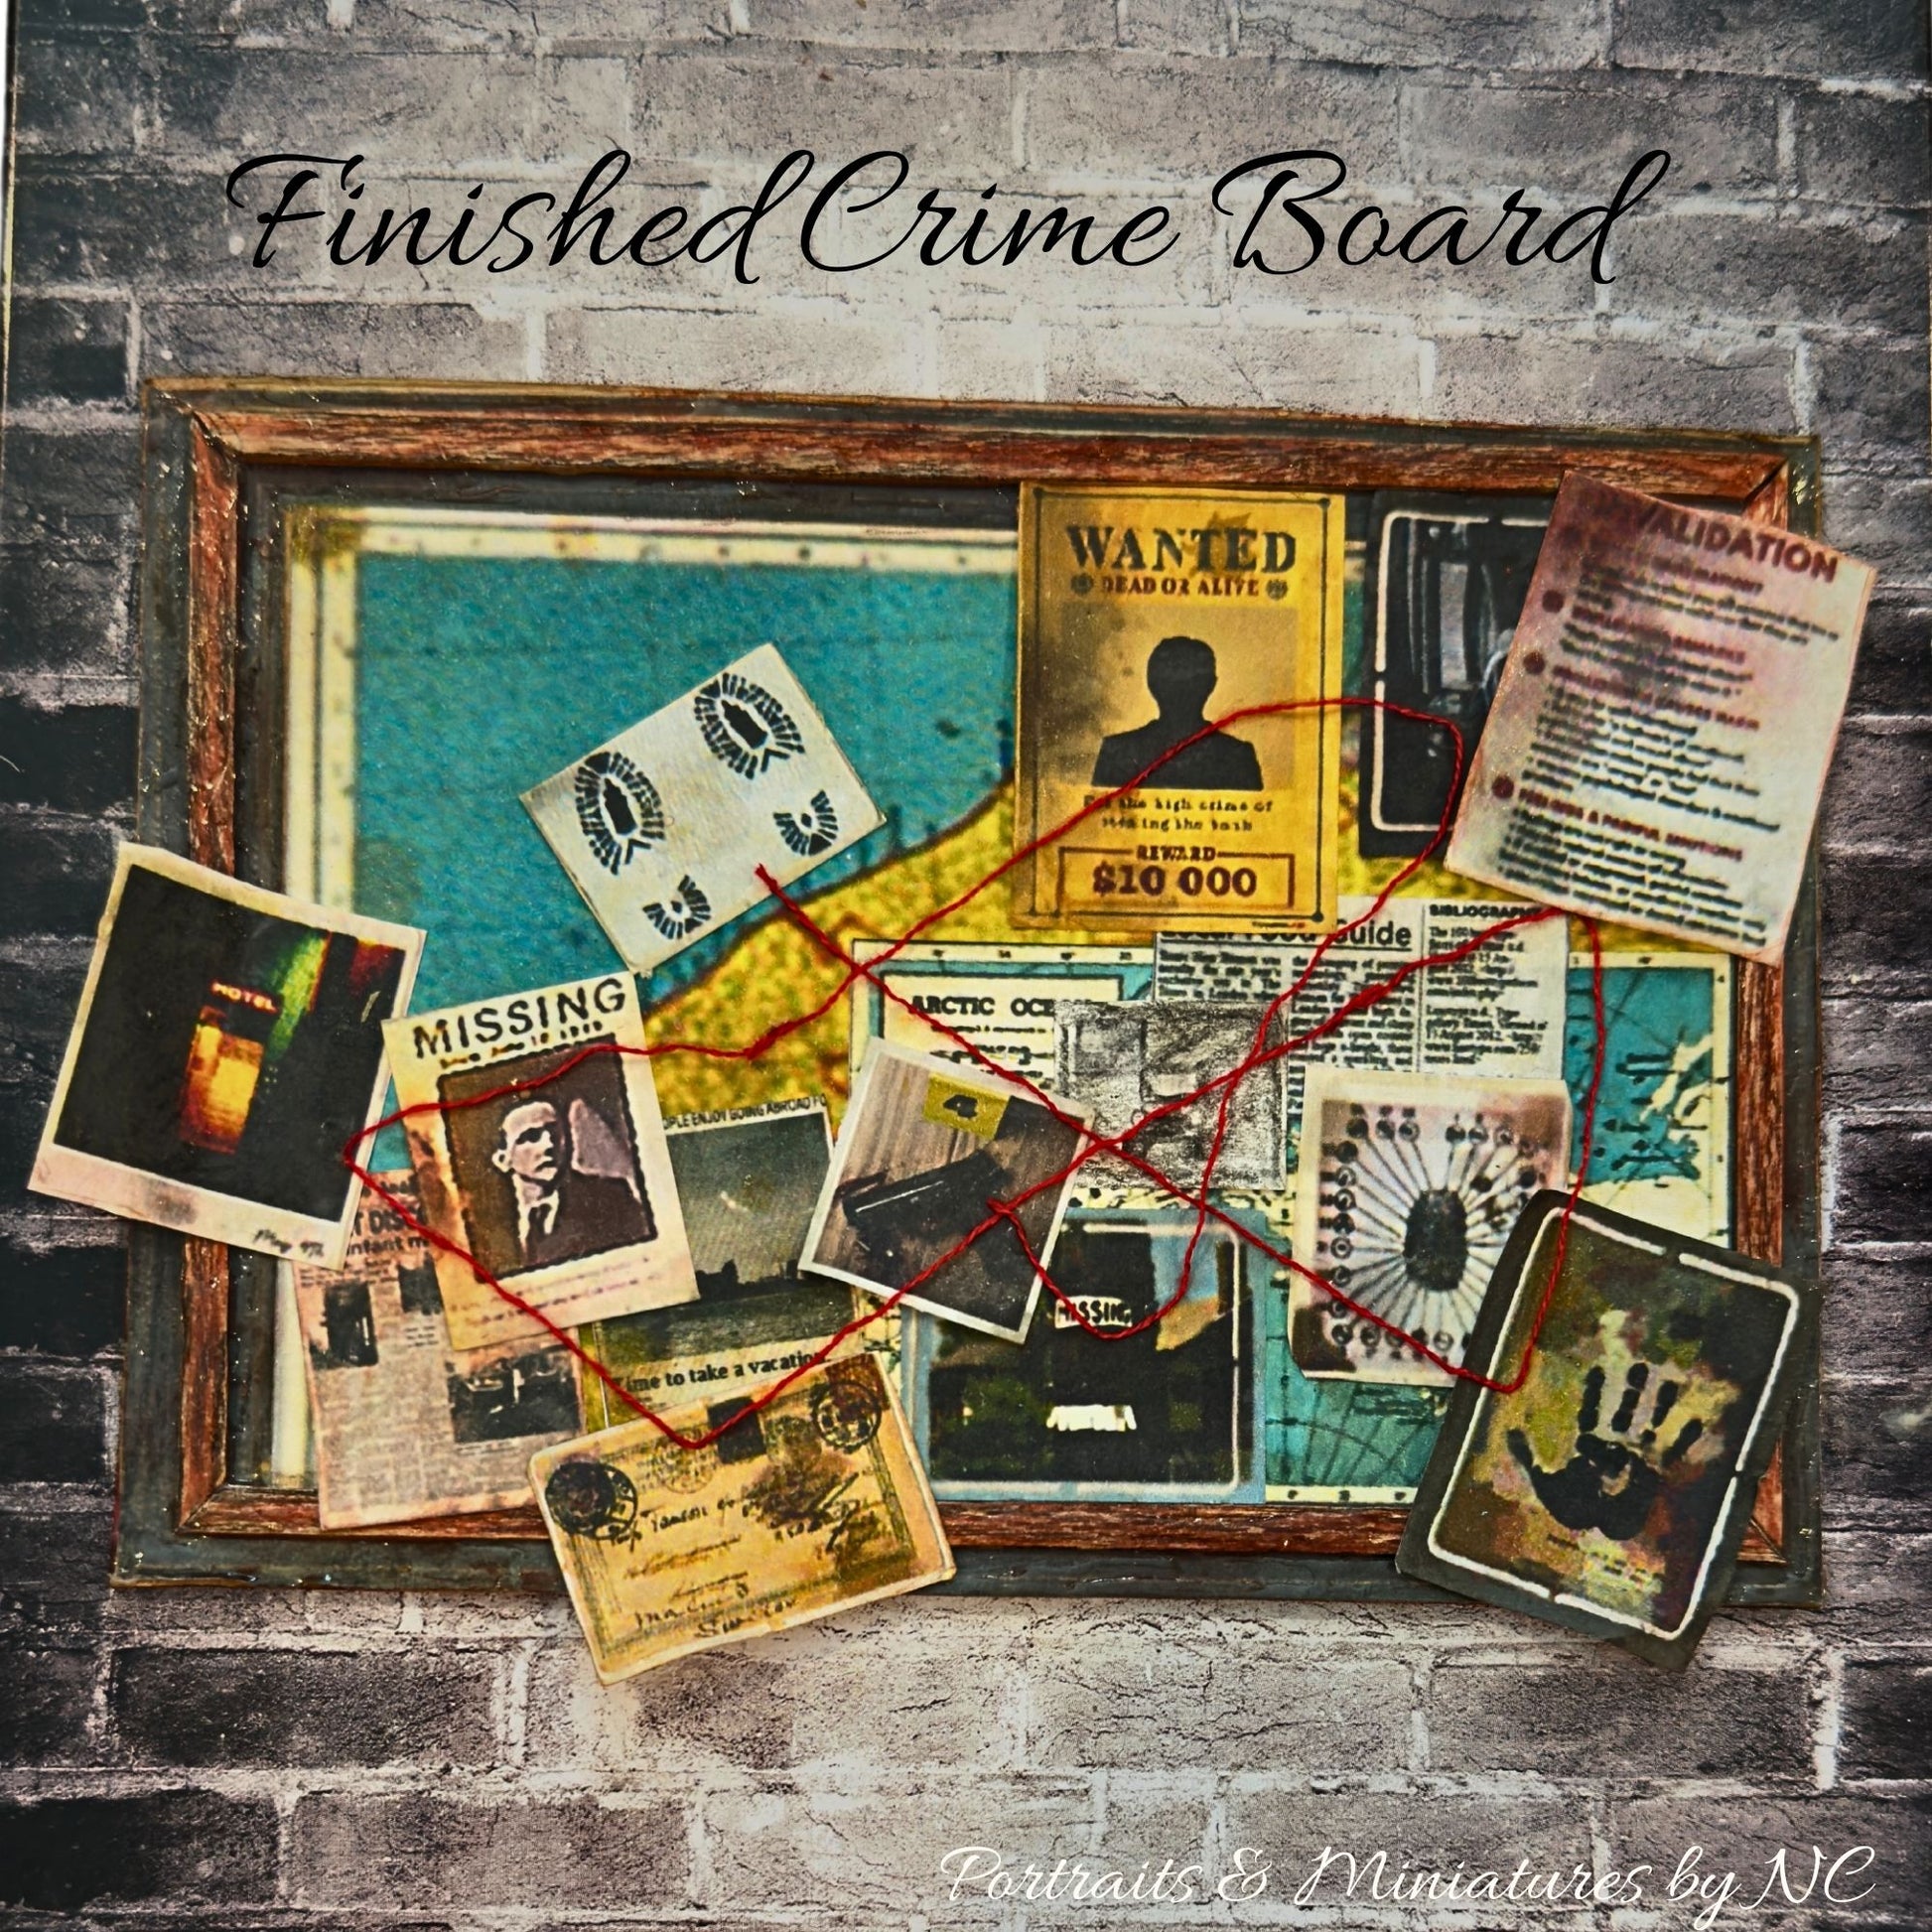 Miniature Handmade Evidence Board /Crime Board- Diorama Supplies –  Portraits and Miniatures by NC